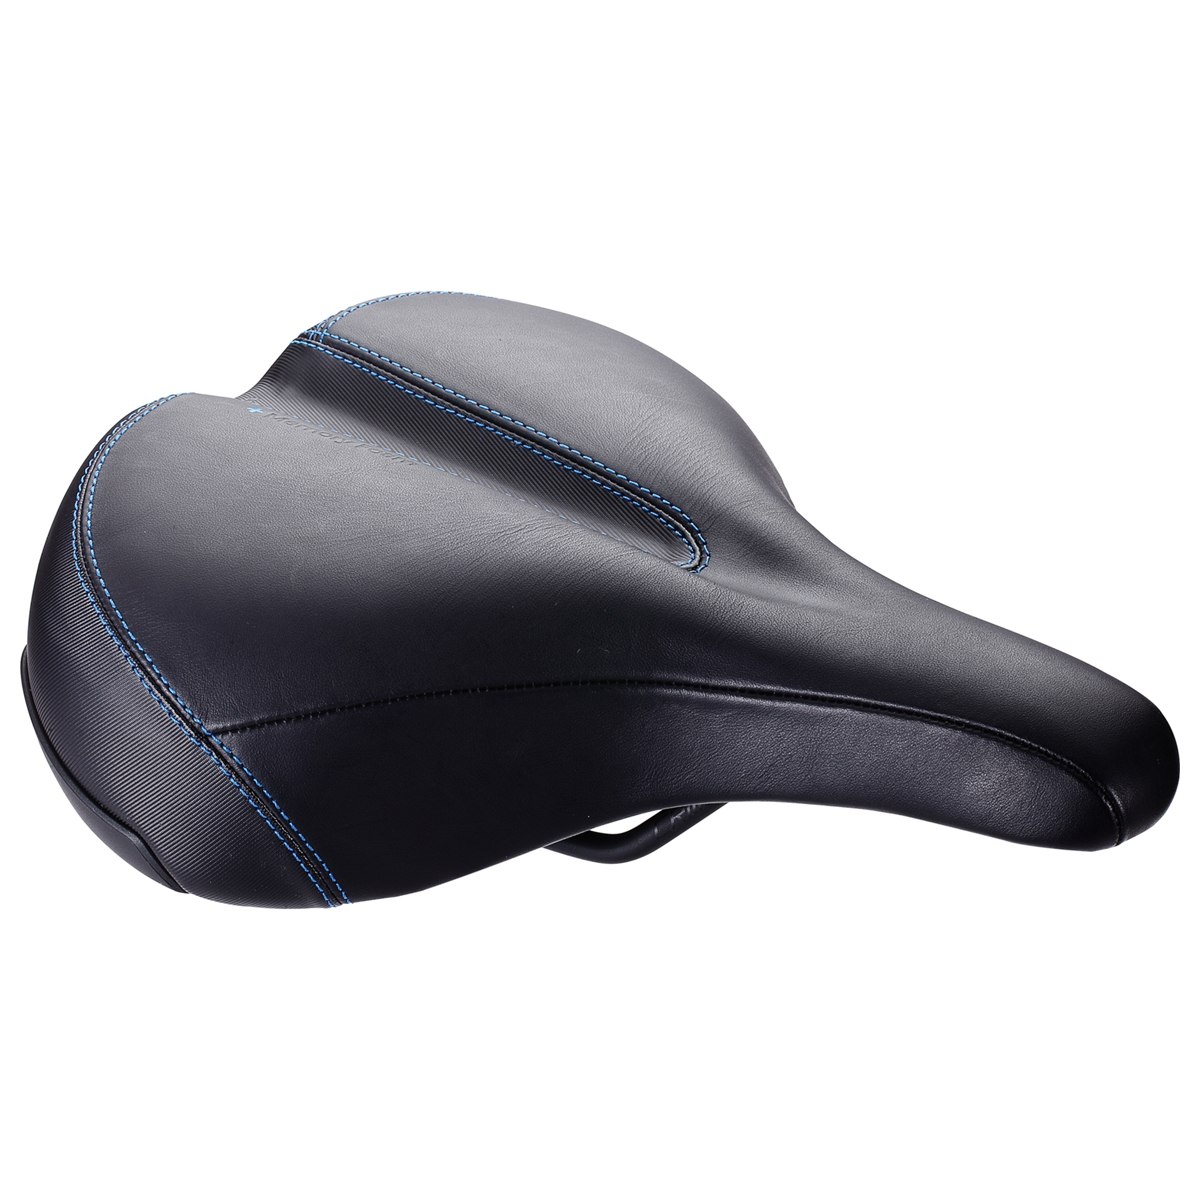 Bild von BBB Cycling ComfortPlus Relaxed Leather BSD-103 Sattel - schwarz